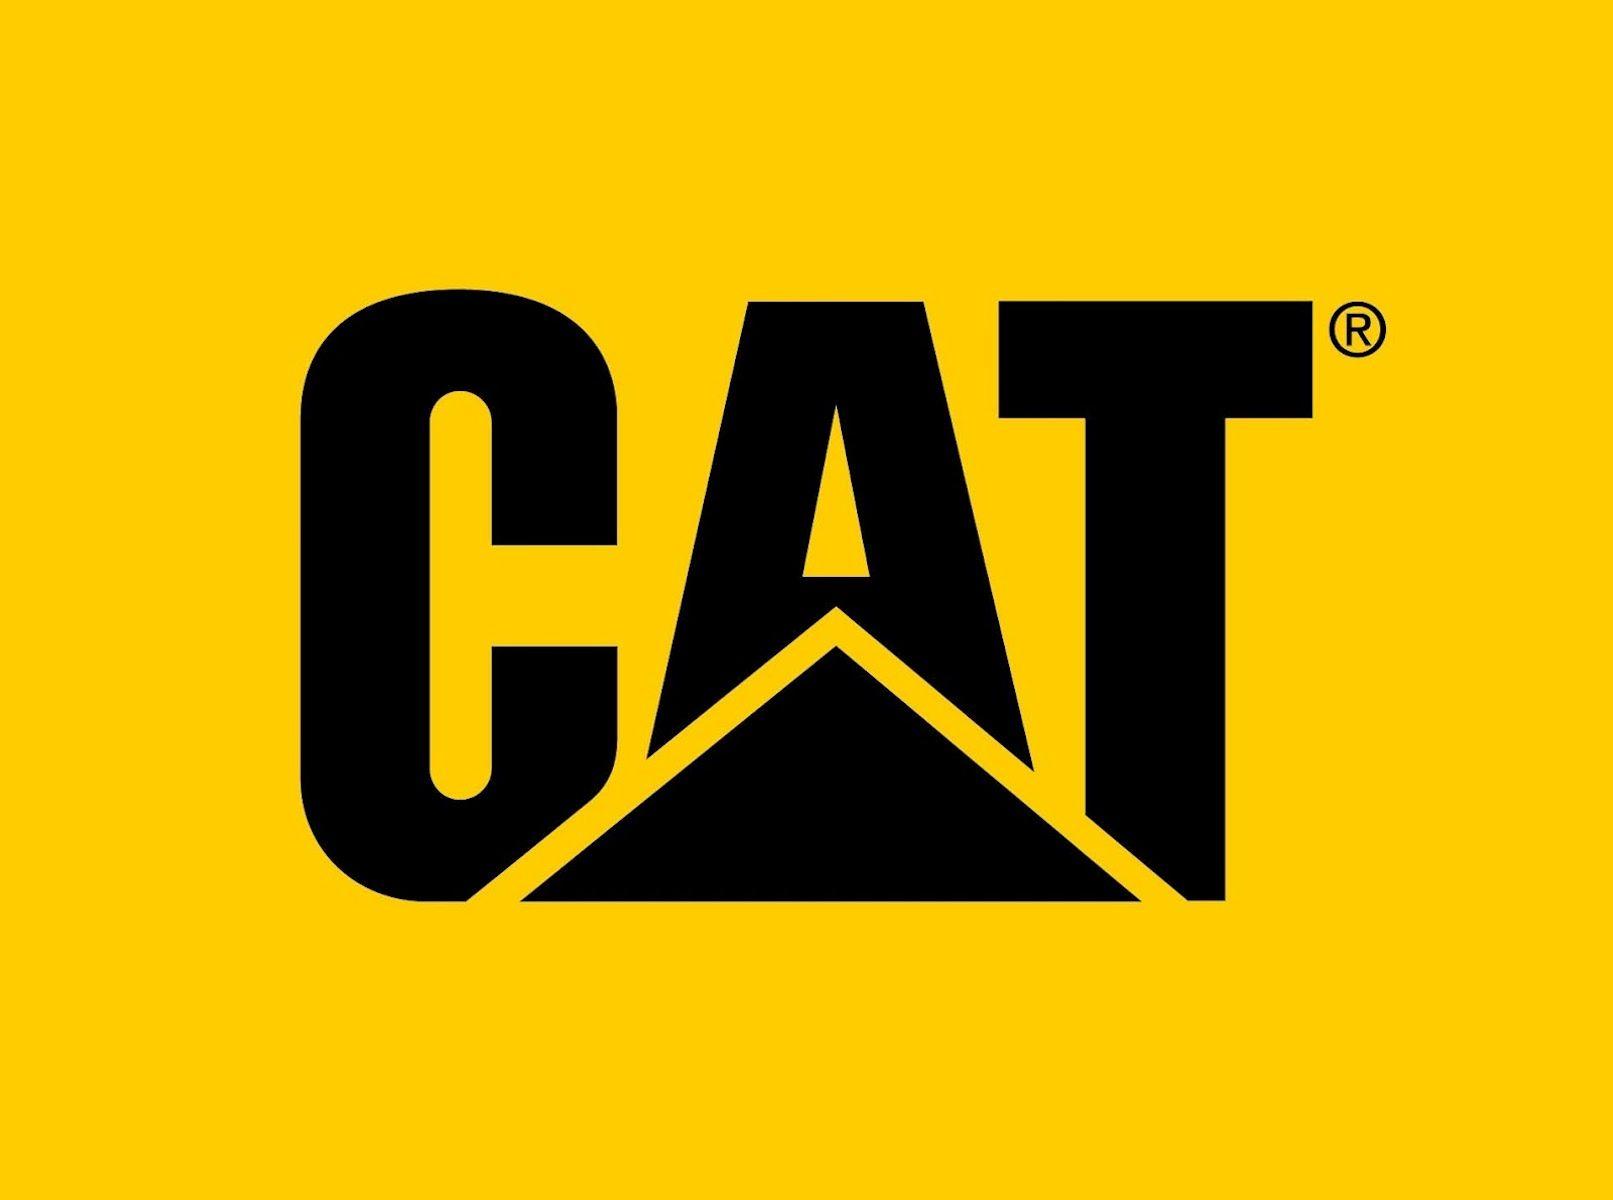 Red Caterpillar Logo - CATerpillar Logo HD Wallpaper | CAT - This is my career. | Logos ...